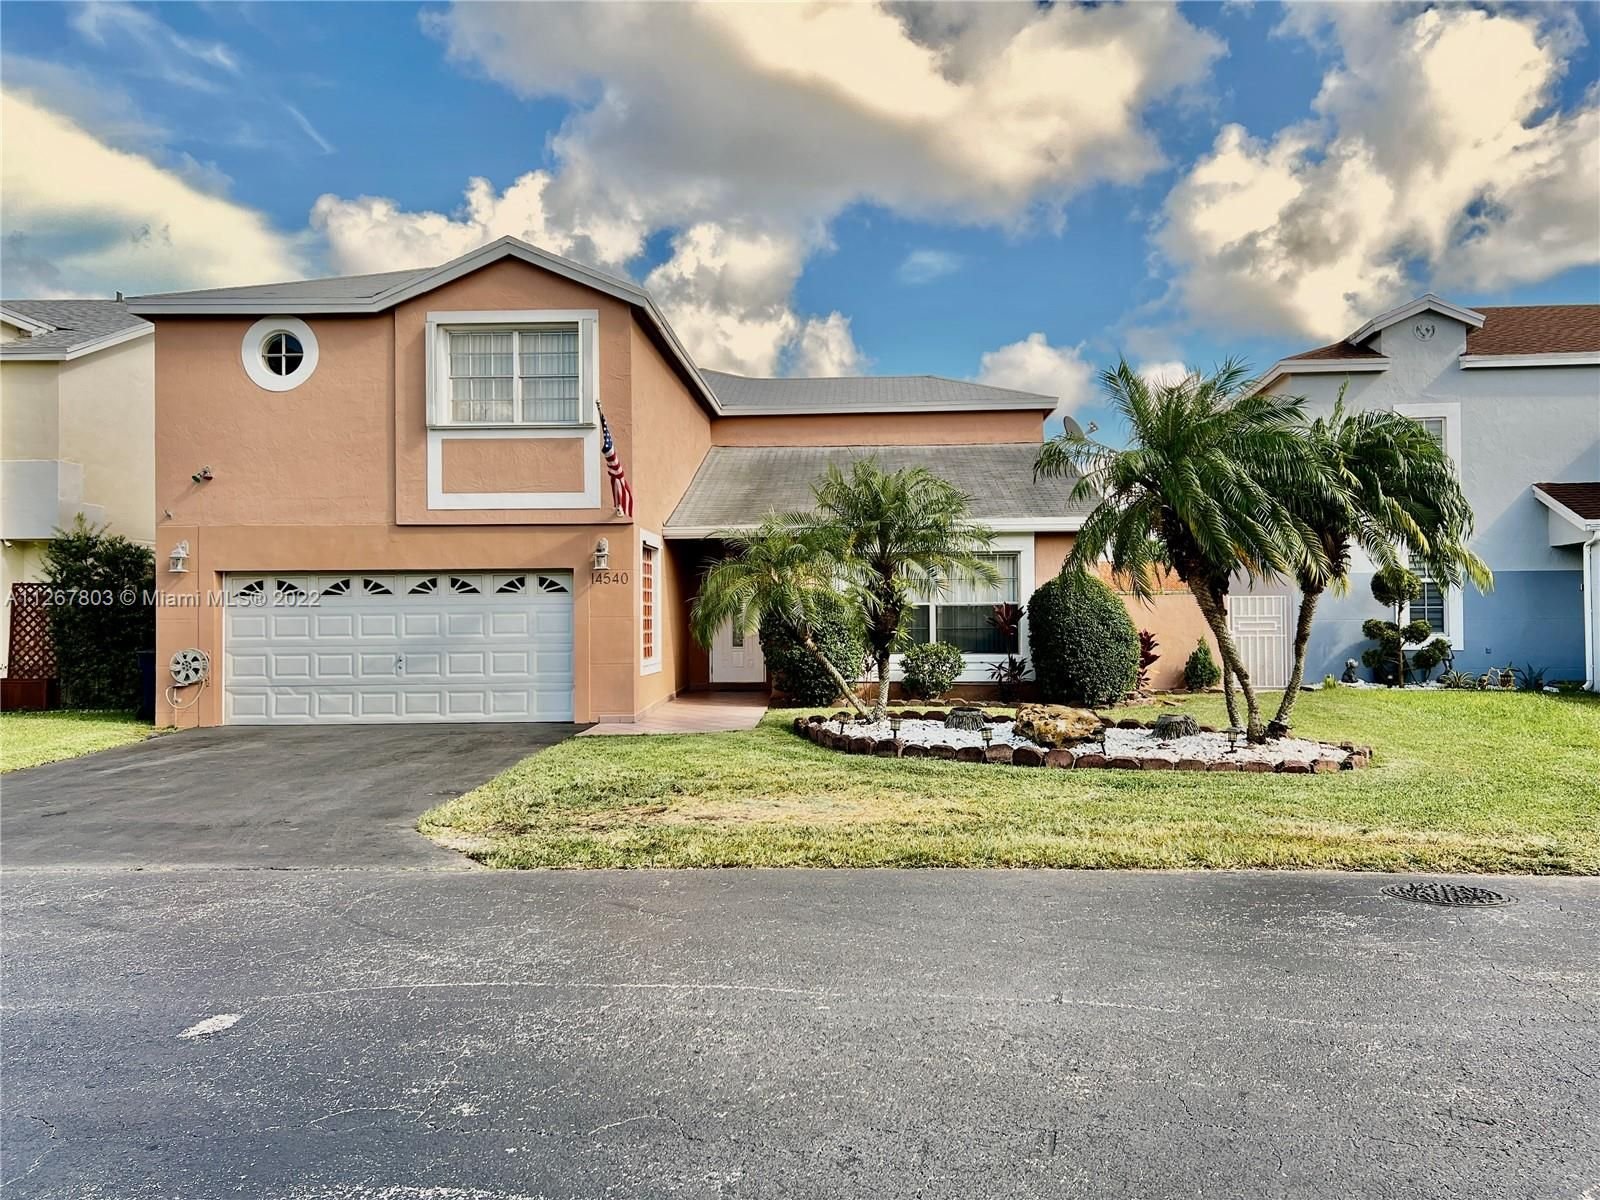 Real estate property located at 14540 95 Lane, Miami-Dade County, Miami, FL